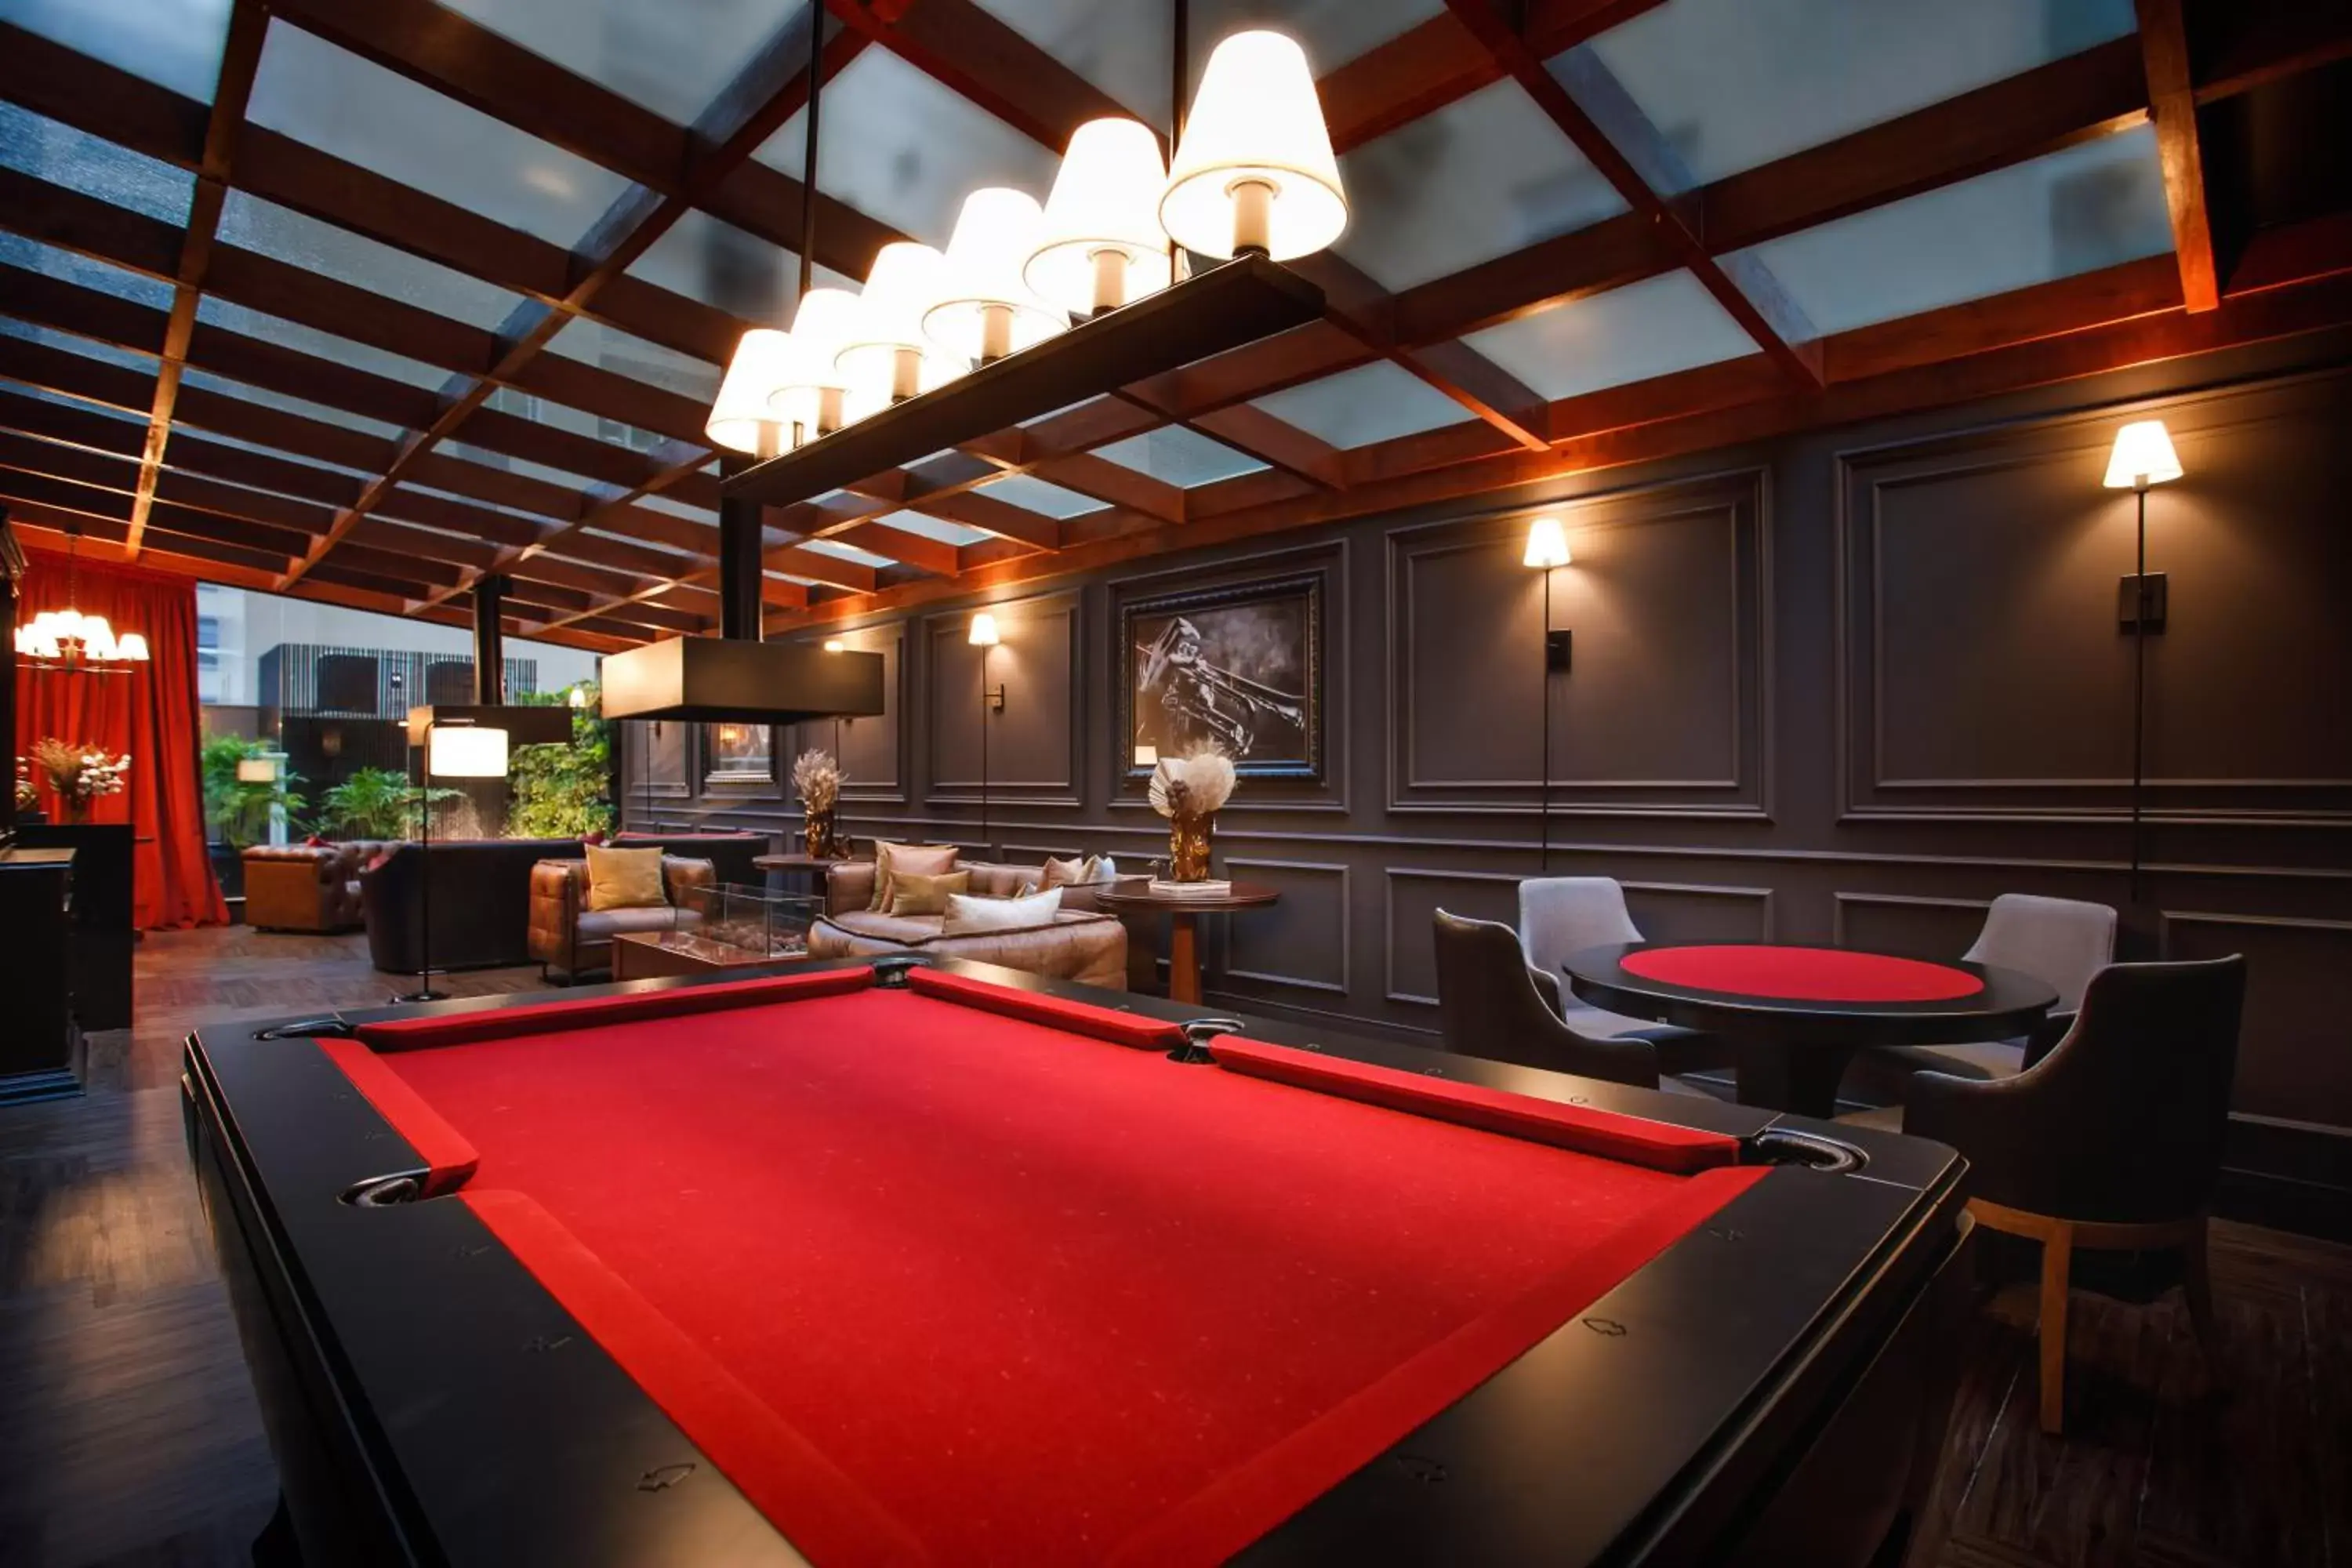 Game Room, Billiards in Sofistic Hotel